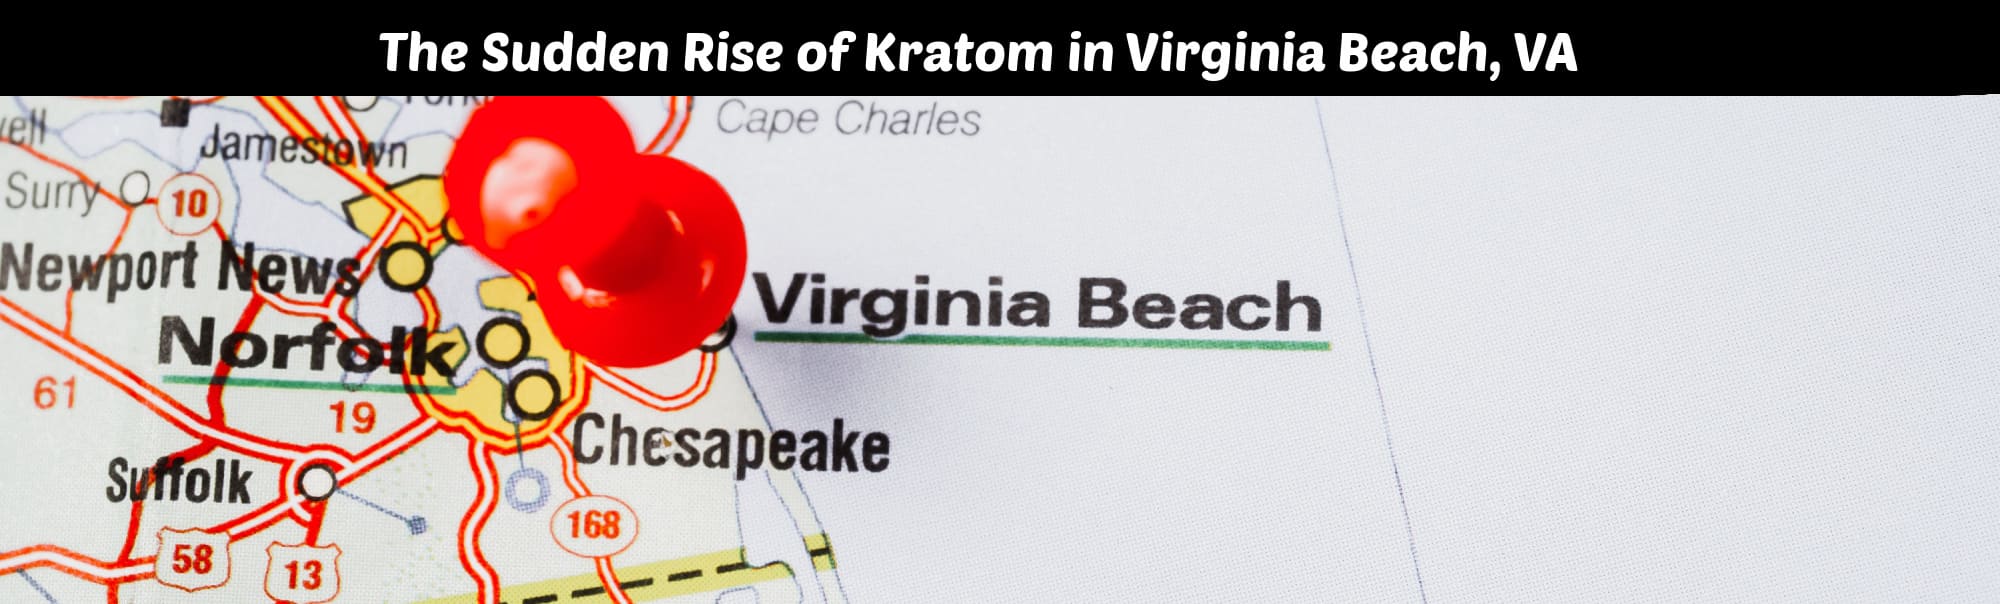 image of the sudden rise of kratom in virginia beach va